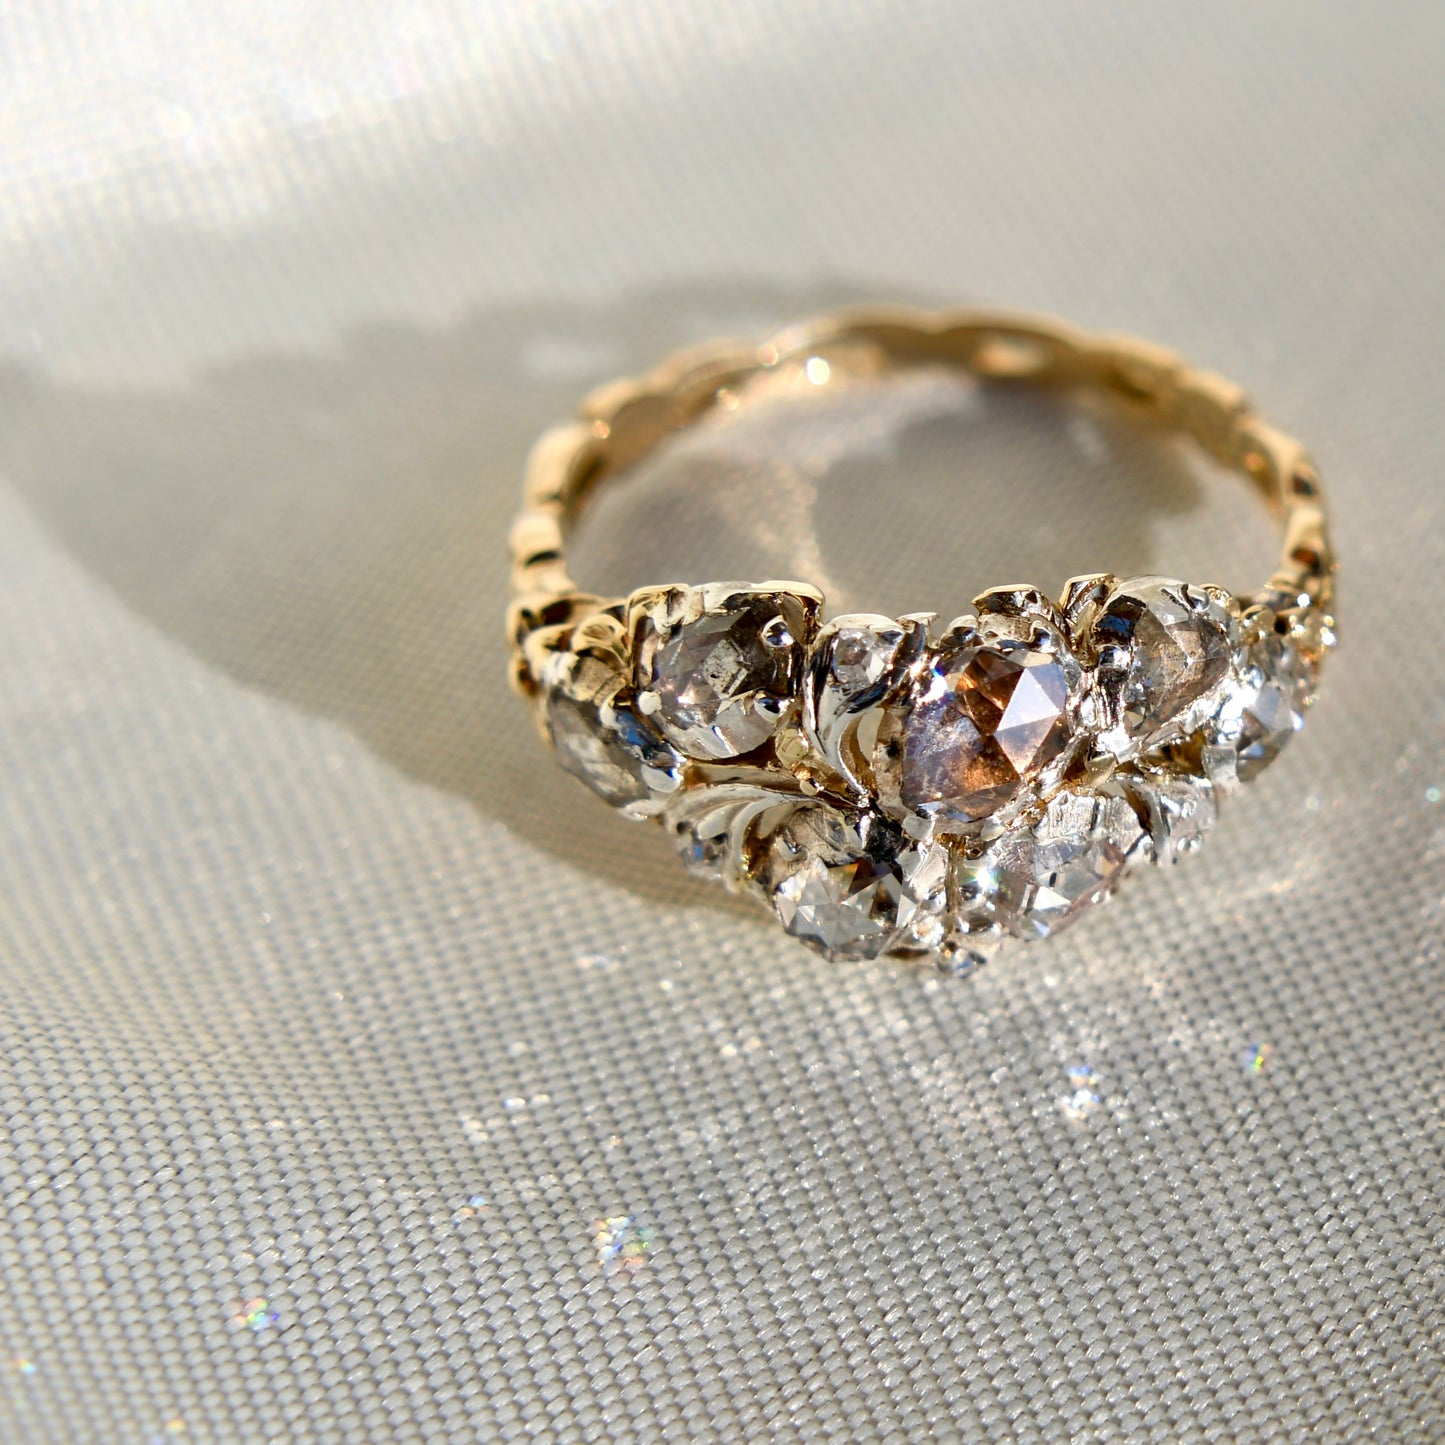 Antique Rococo rose cut diamond Giardinetti ring, France around 1760